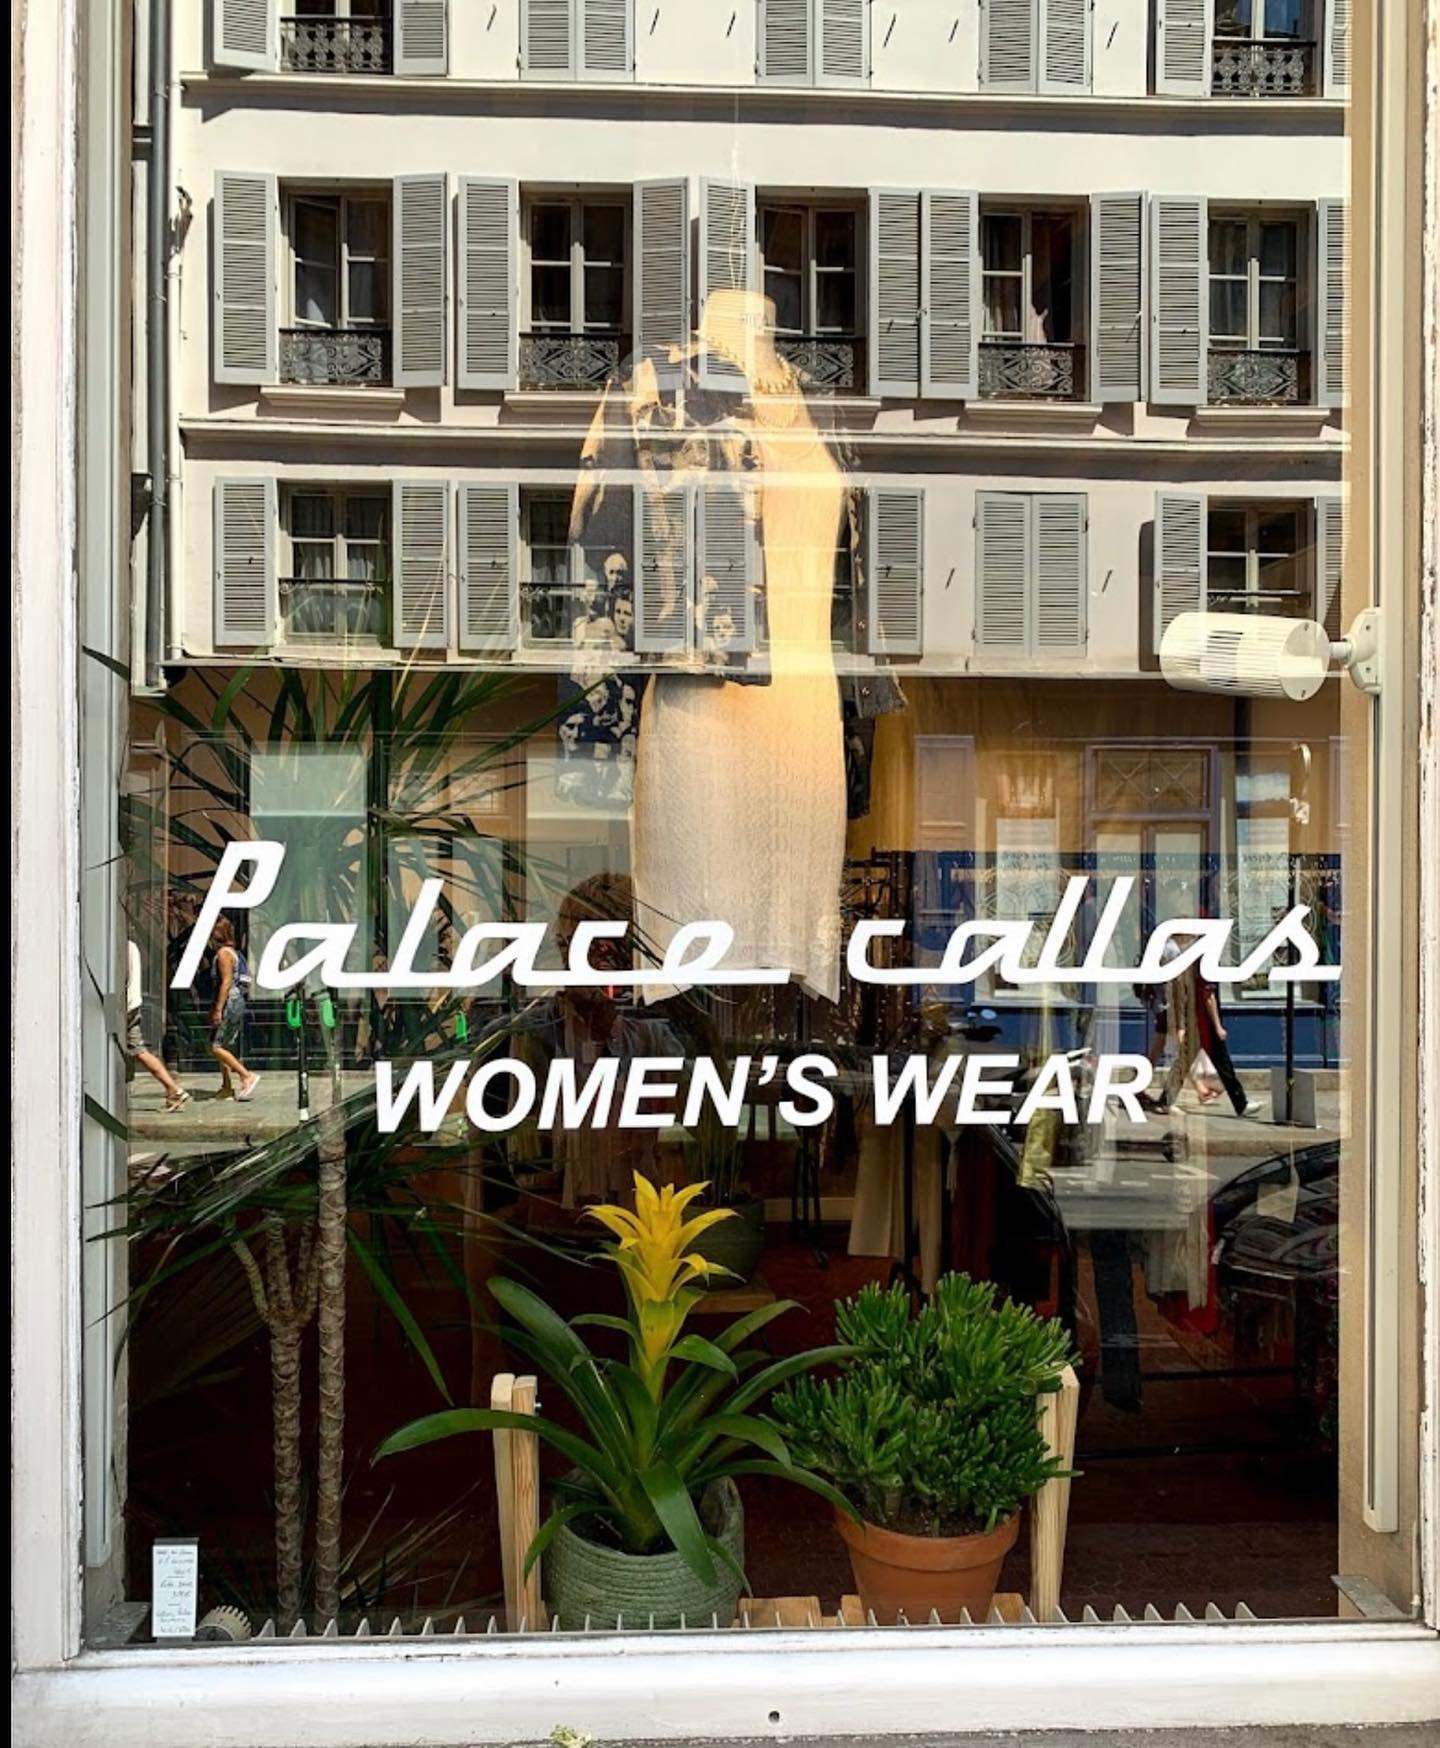 The best vintage shops in Paris | The exterior of Palace Callas womenswear vintage shop